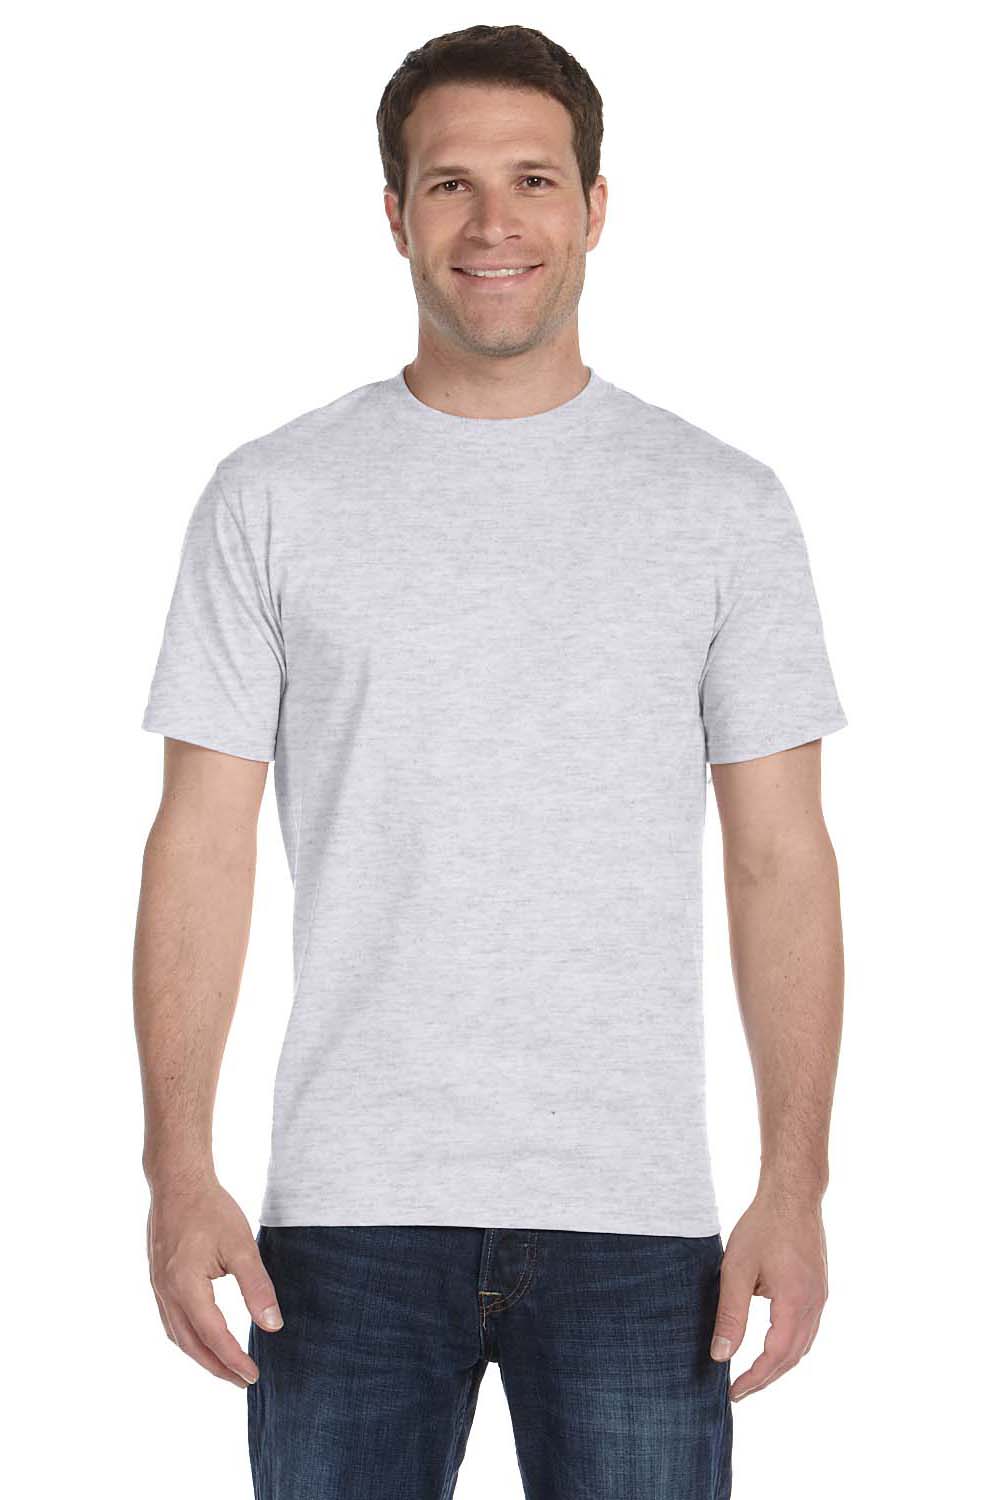 Hanes 5280 Mens ComfortSoft Short Sleeve Crewneck T-Shirt Ash Grey Front